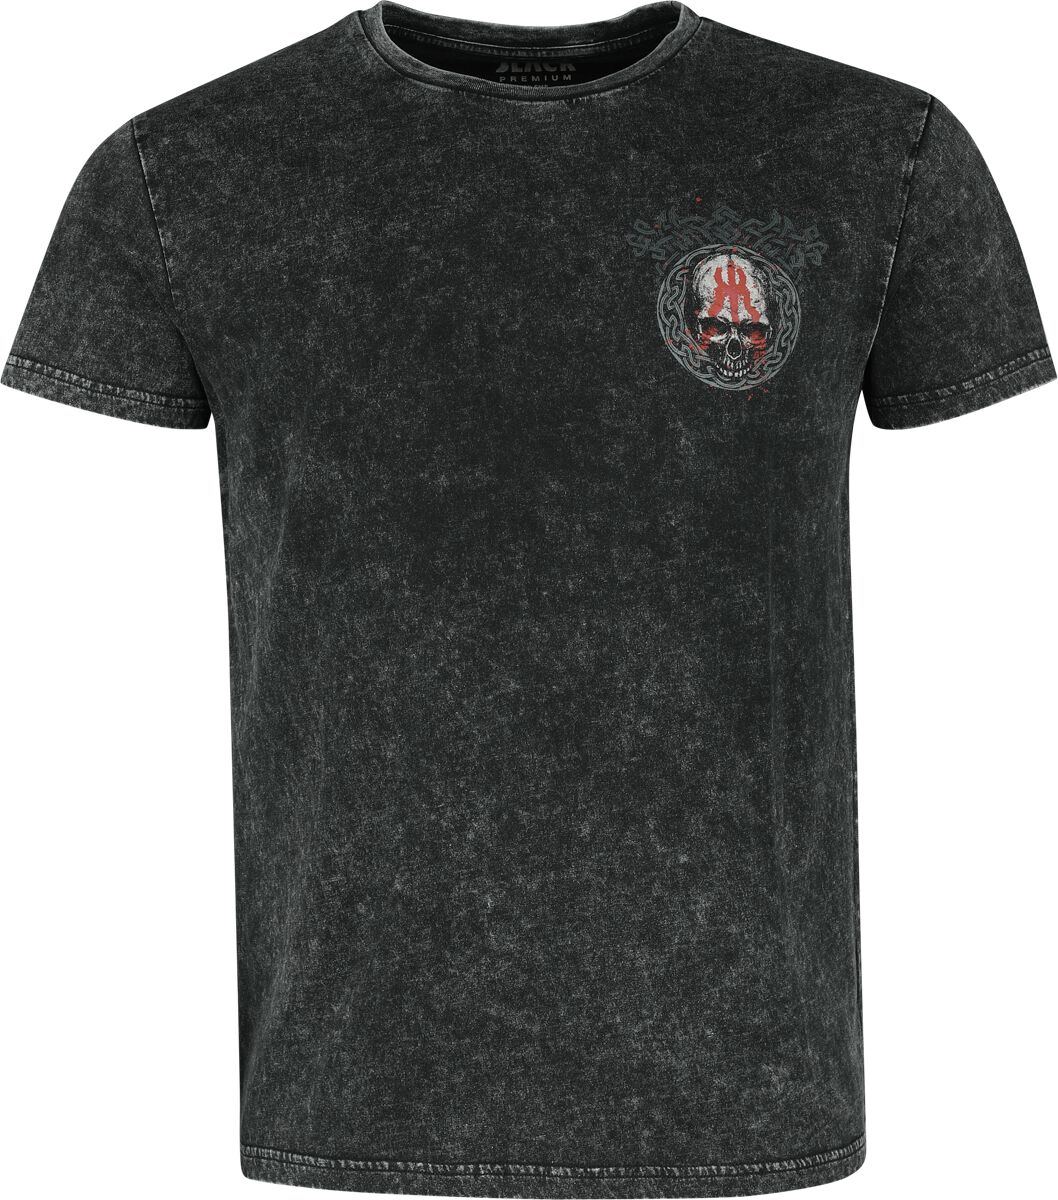 Black Premium by EMP T-Shirt With Skull Print T-Shirt schwarz in S